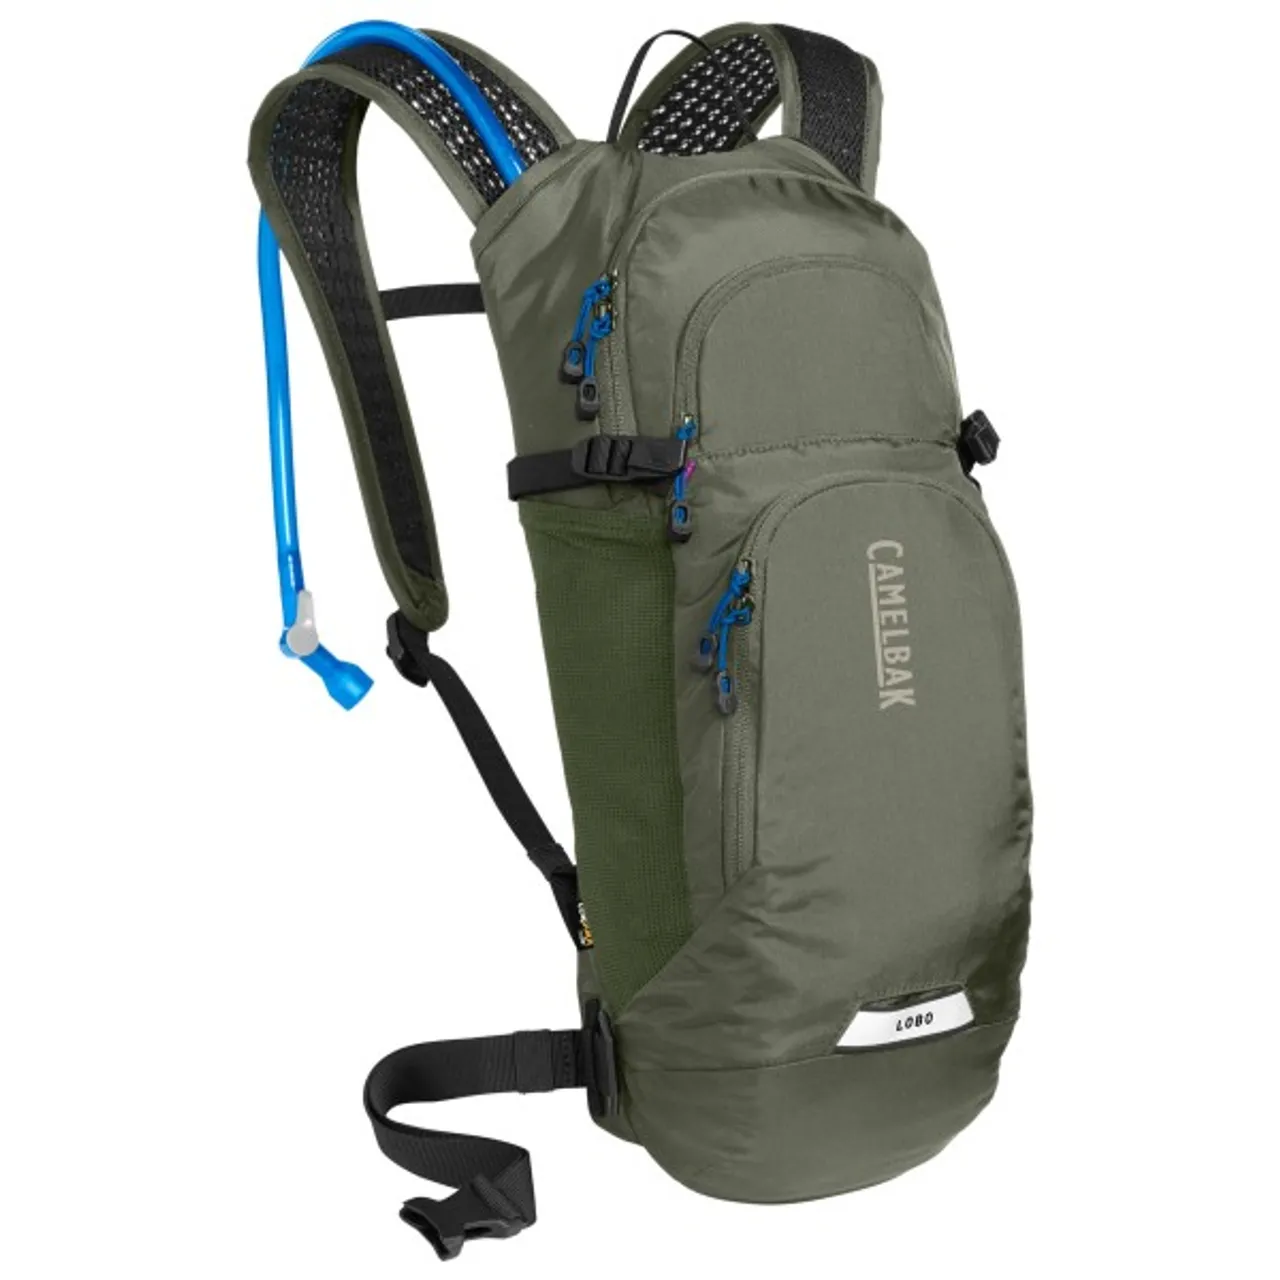 Camelbak - Lobo 9 - Cycling backpack size 6 l + 2 l Reservoir, olive